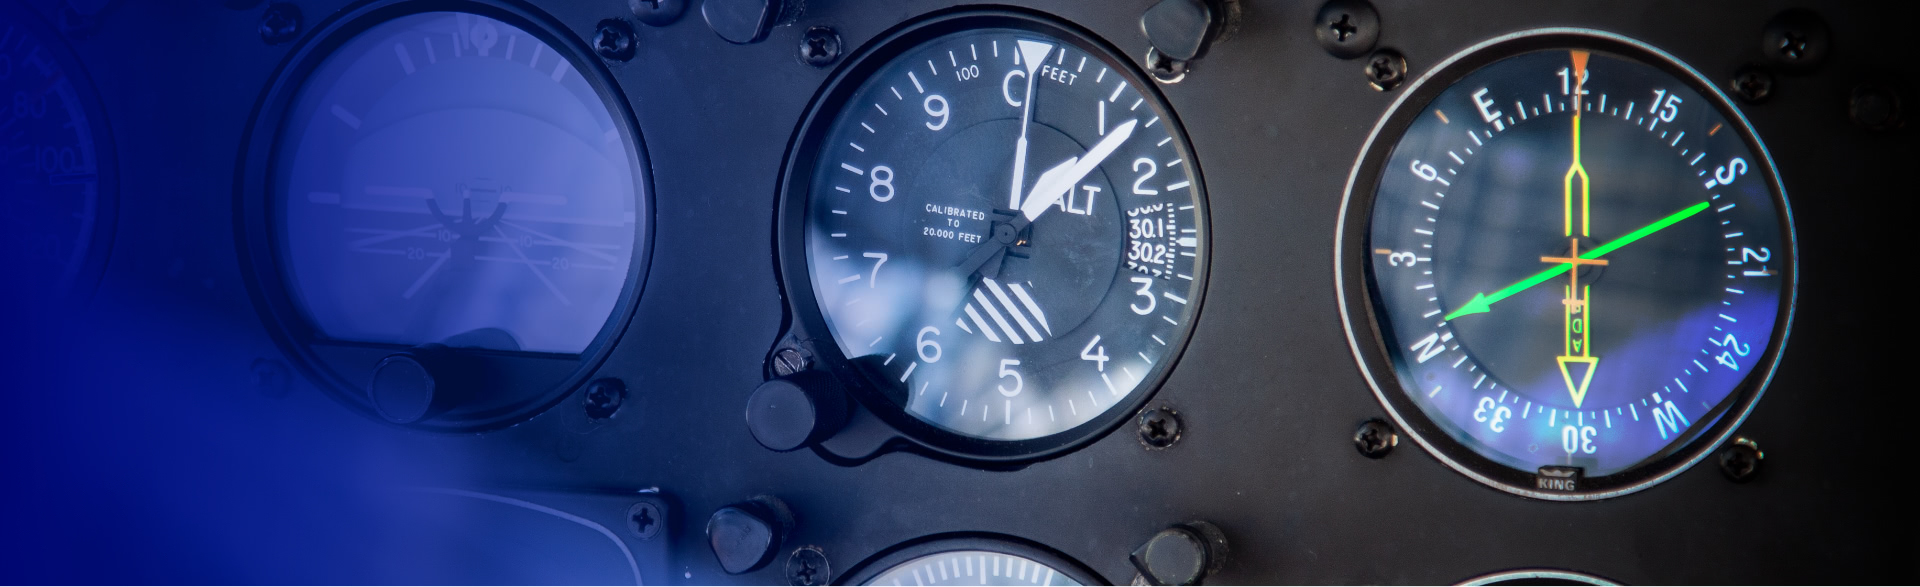 Flight training instrument gauges